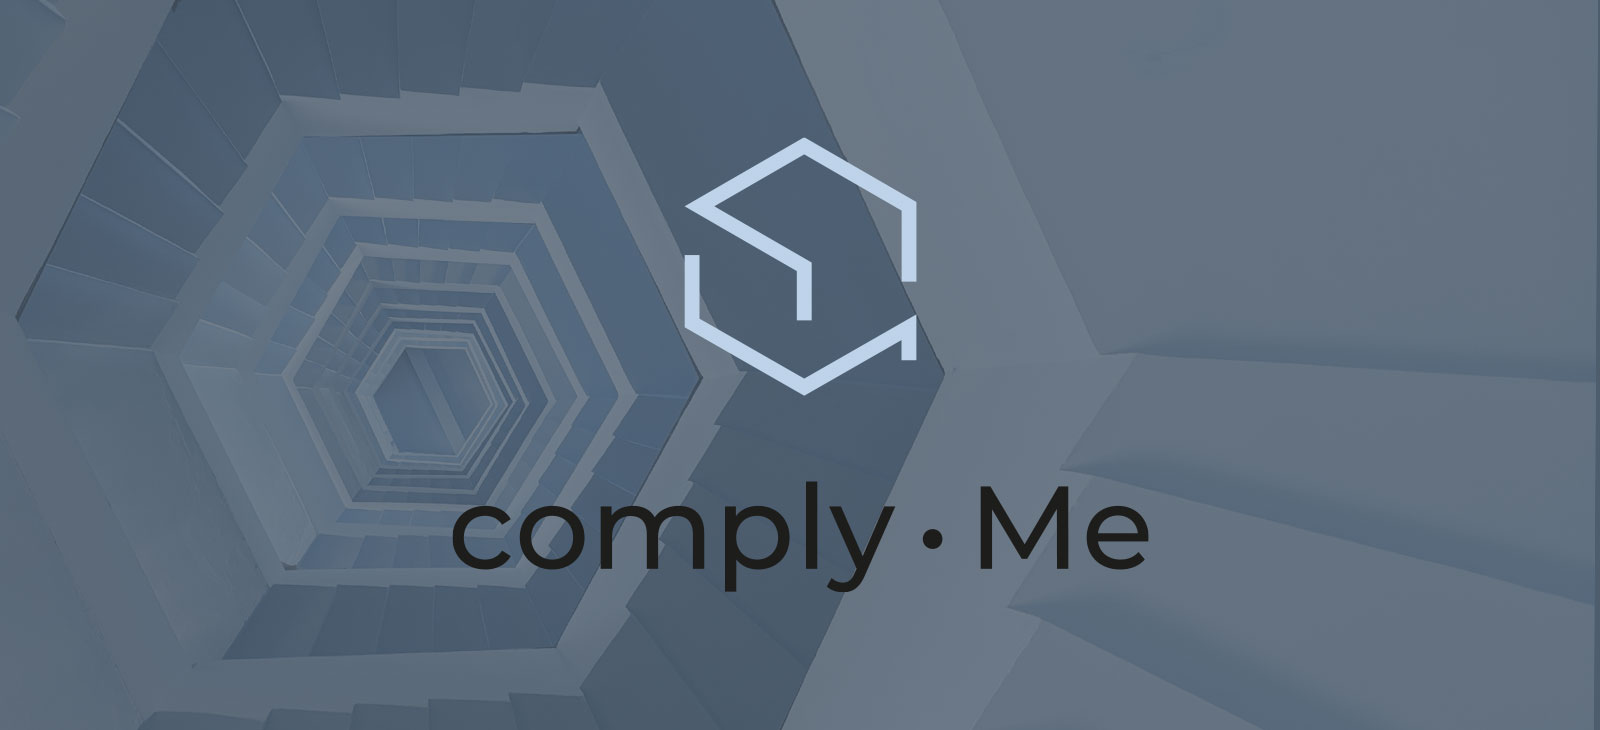 complyMe - Logo + Key visual